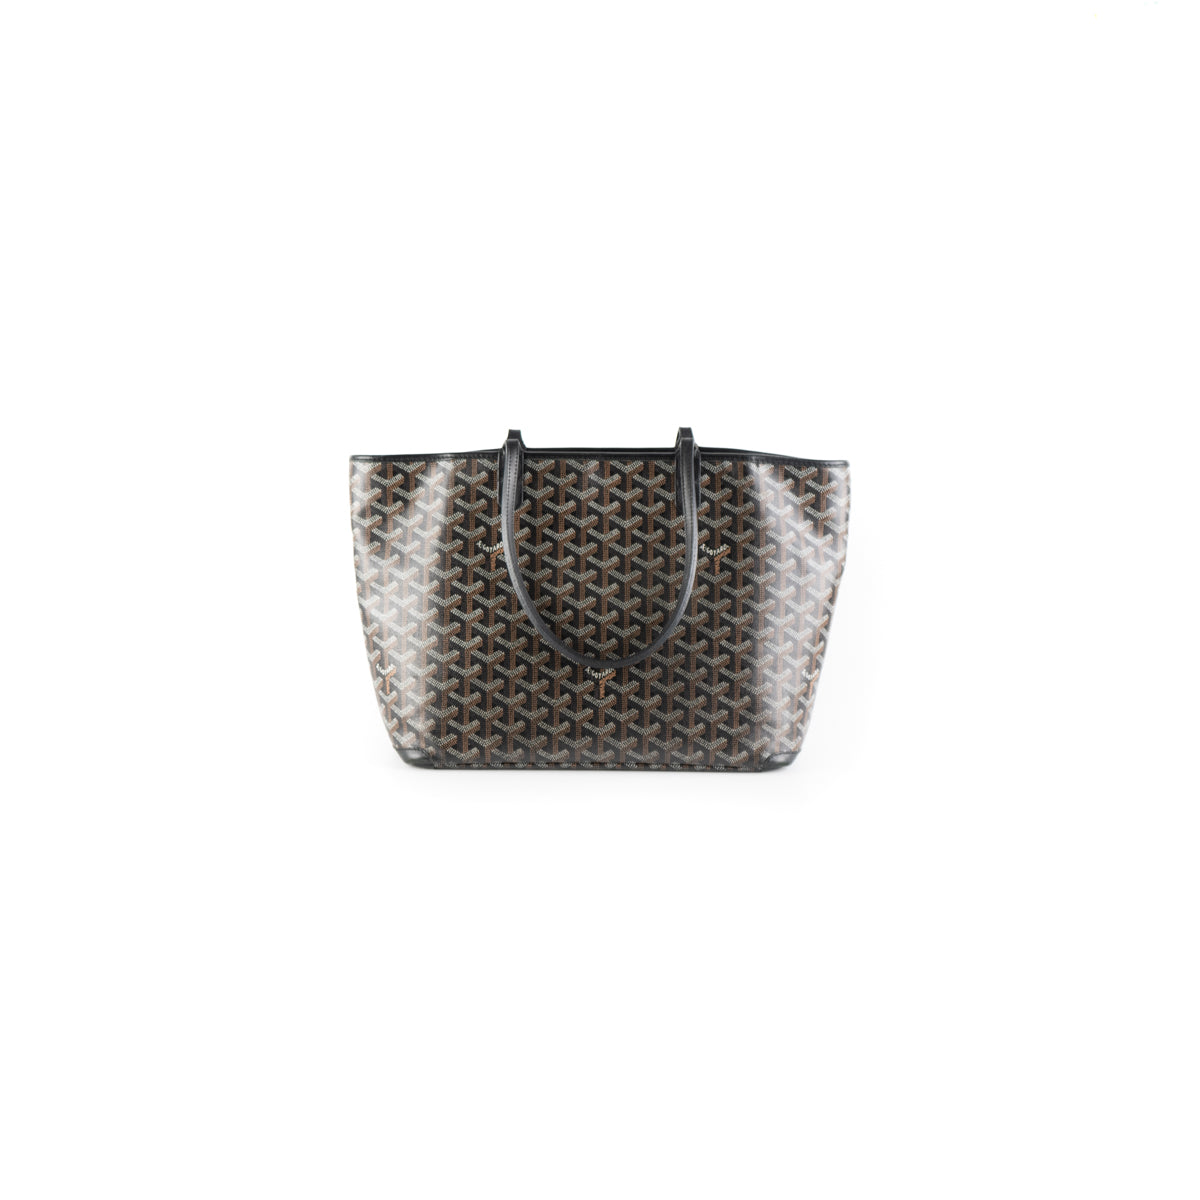 Goyard Artois PM - Black Totes, Handbags - GOY22534